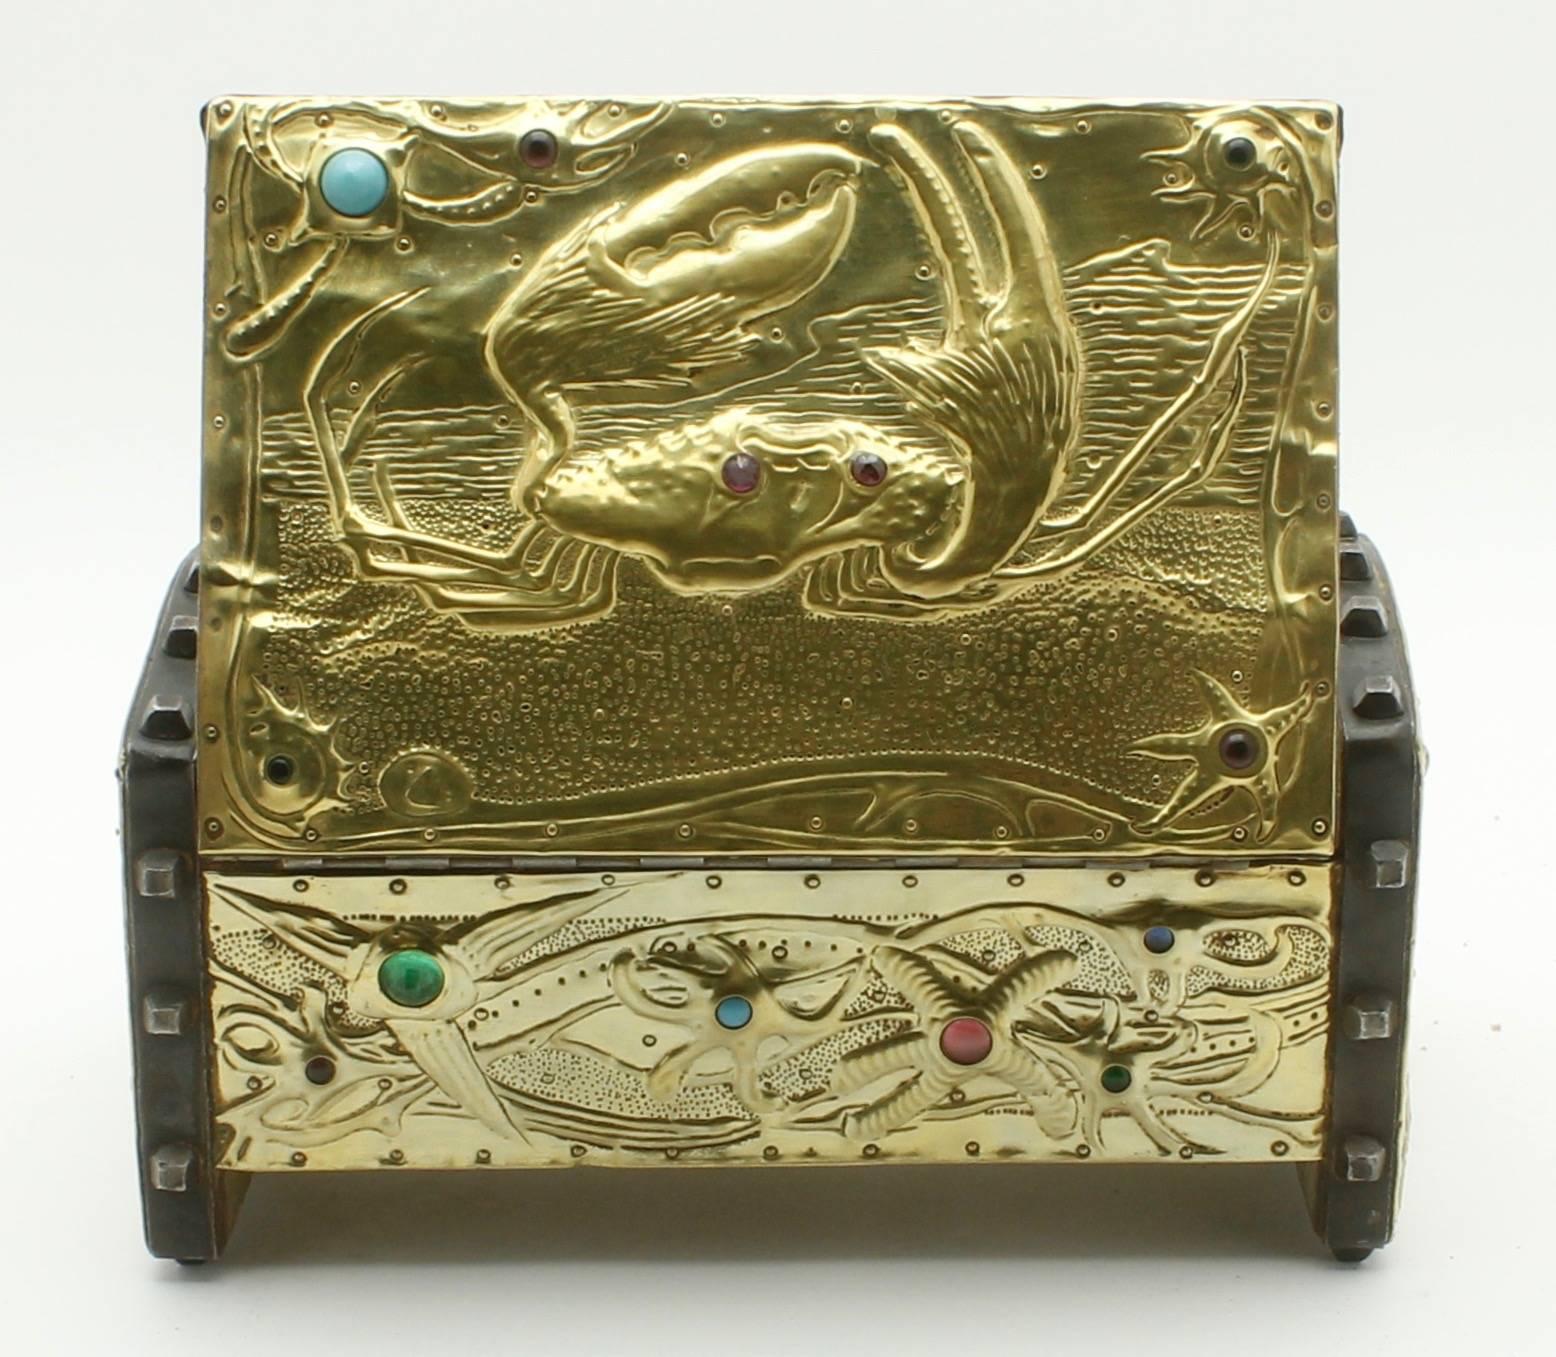 Alfred-Louis-Achille Daguet
Crab box, circa 1900
Medium:
Design, wood, metal forget, copper hammered with glass cabochons.

Movement:
Art Nouveau

Dimensions
4.1 in H x 8.1 in W x 4.5 in D
10.8 cm H x 20.5 cm W x 11.5 cm